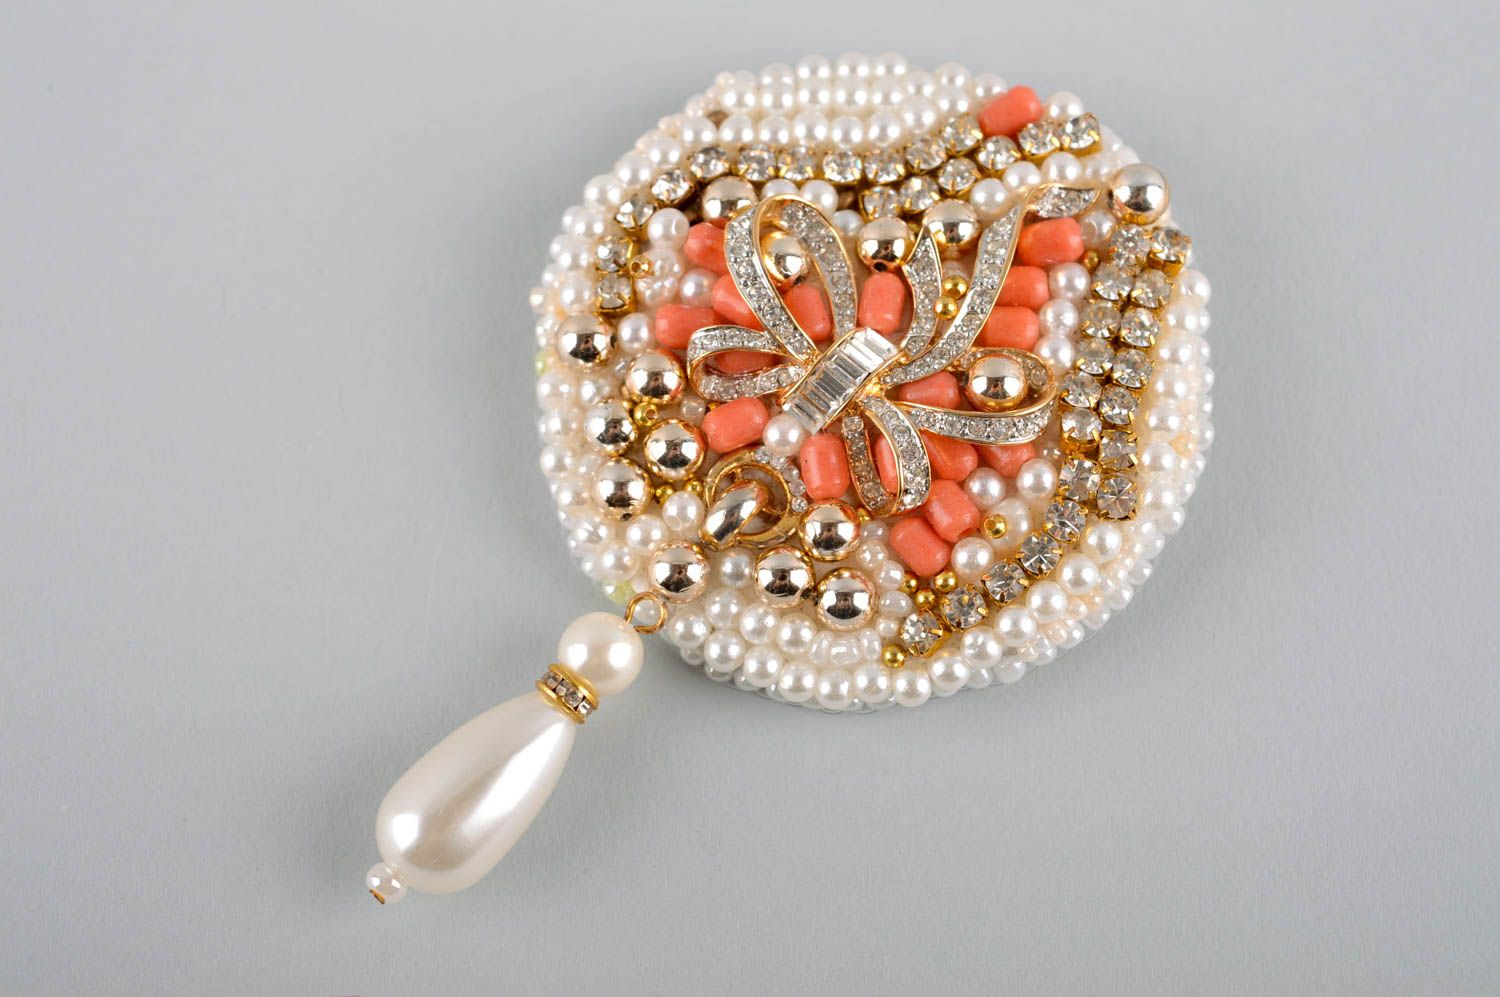 Broche ronde faite main Accessoire femme perles fantaisie Cadeau femme photo 2